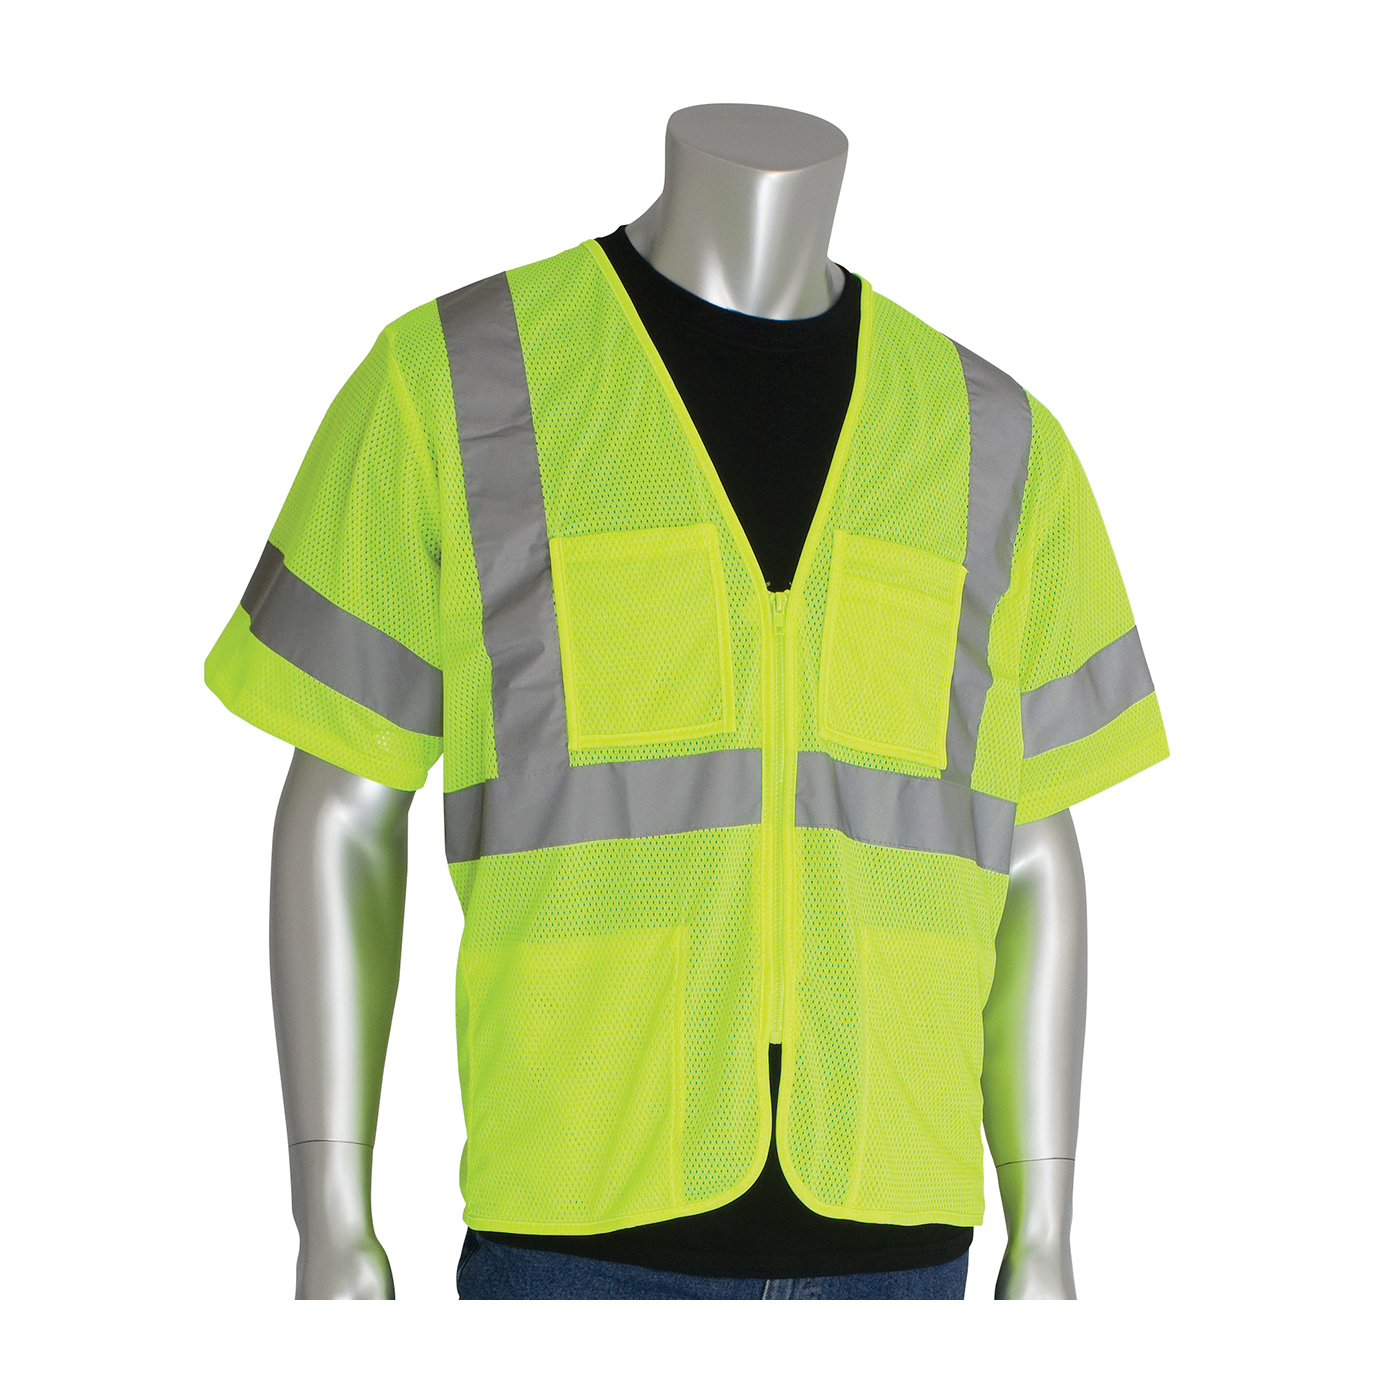 PIP® 303-MVGZ4P-LY/XL Safety Vest, XL, Hi-Viz Lime Yellow, Polyester Mesh, Zipper Closure, 4 Pockets, ANSI Class: Class 3, Specifications Met: ANSI 107 Type R